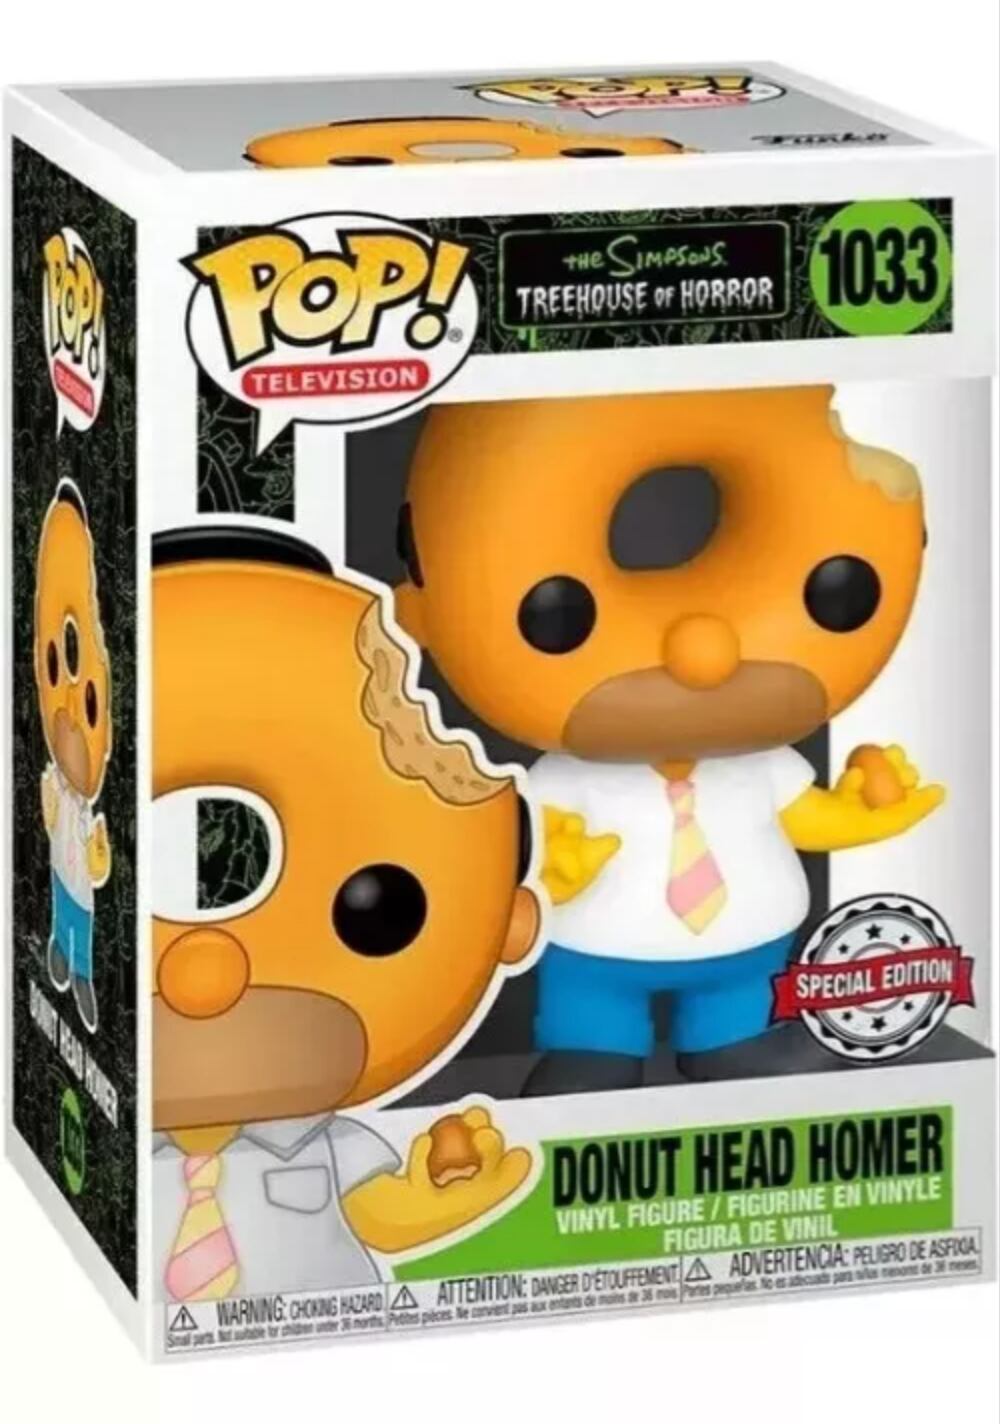 Funko Pop! de Homero Simpson cabeza de dona